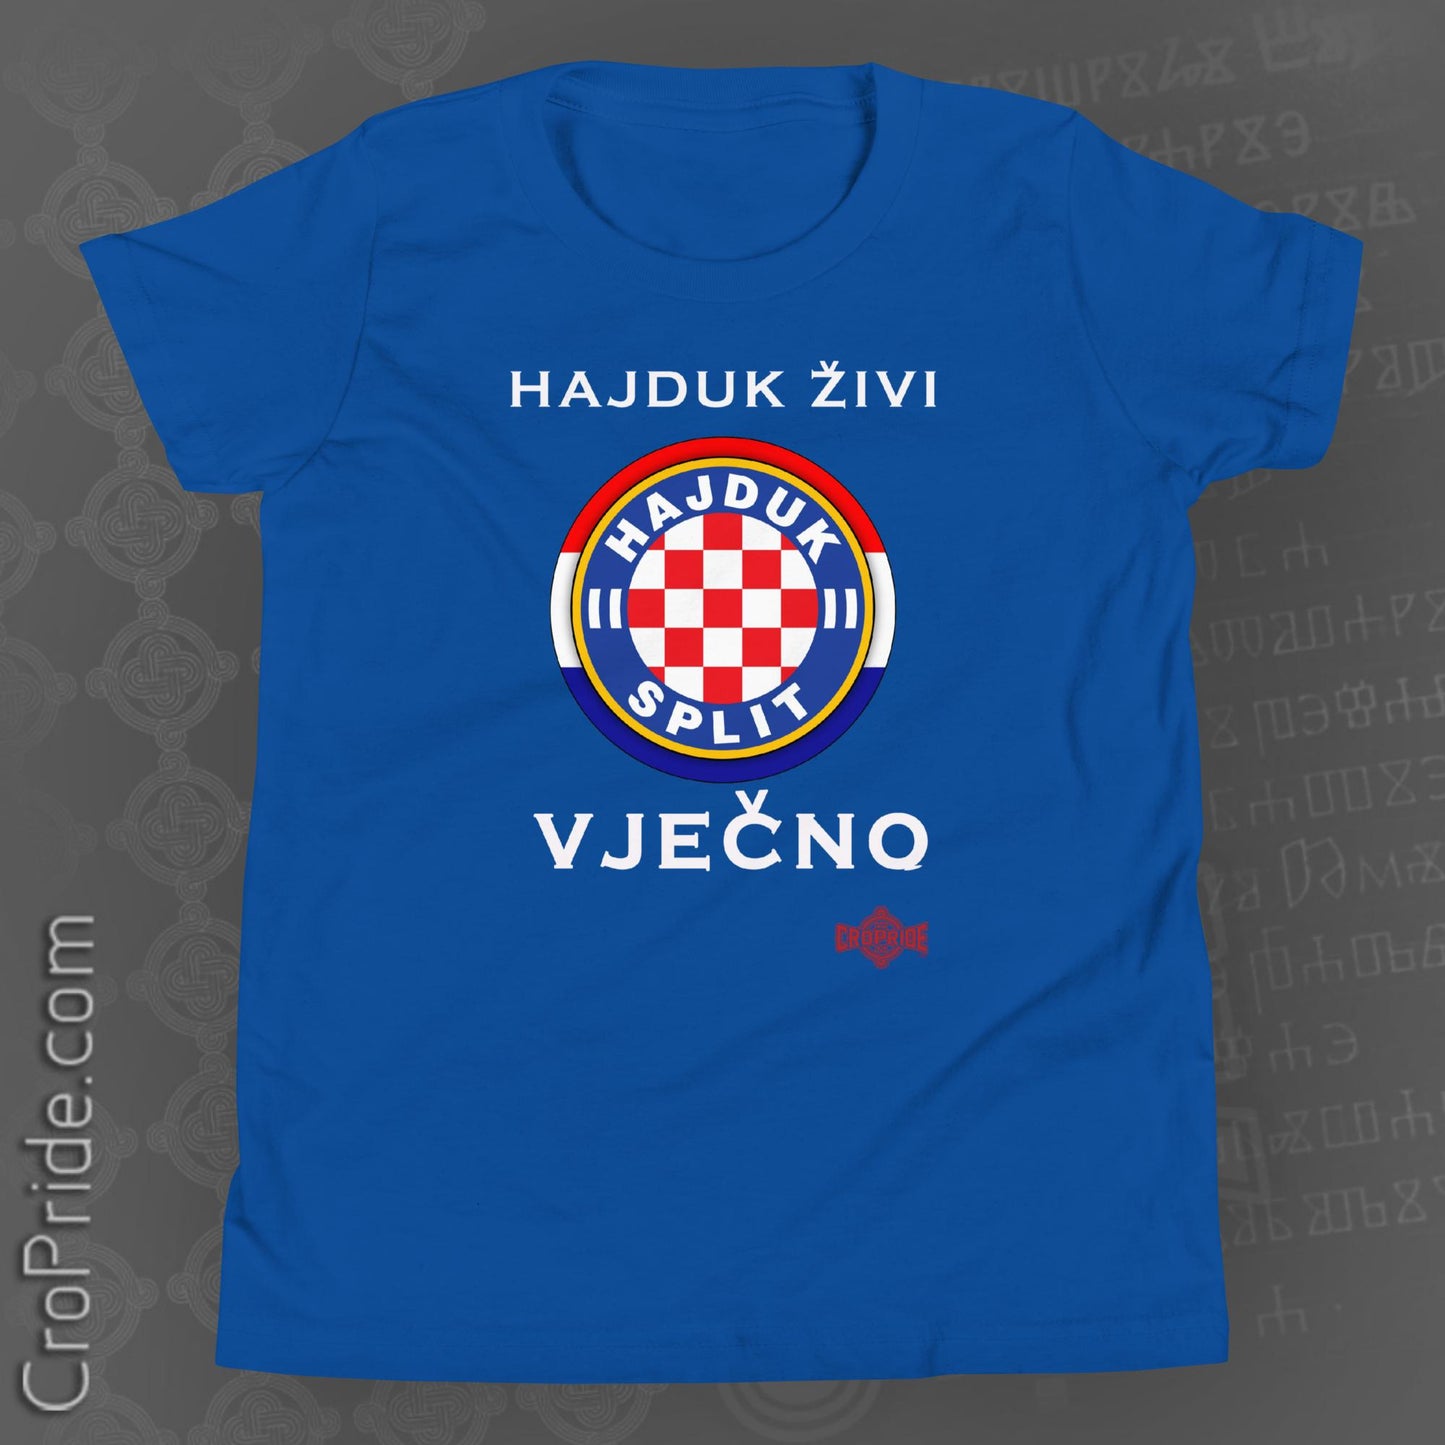 Hajduk Zivi Vjecno Youth T-Shirt - Celebrate The Undying Spirit of Hajduk Split